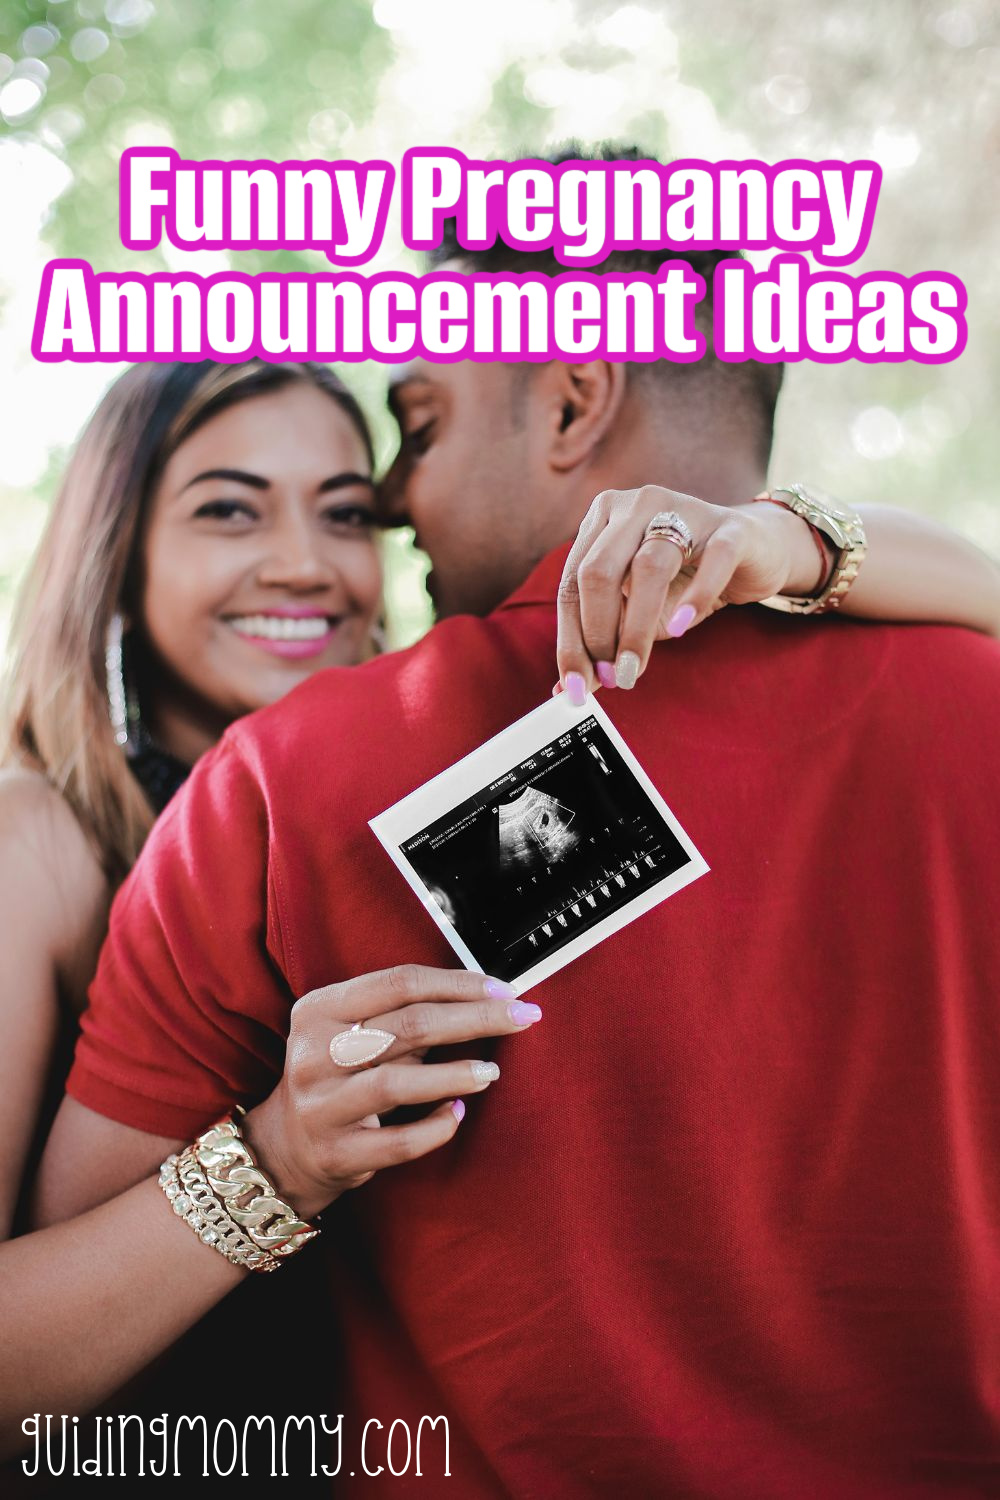 Funny Pregnancy Announcement ideas